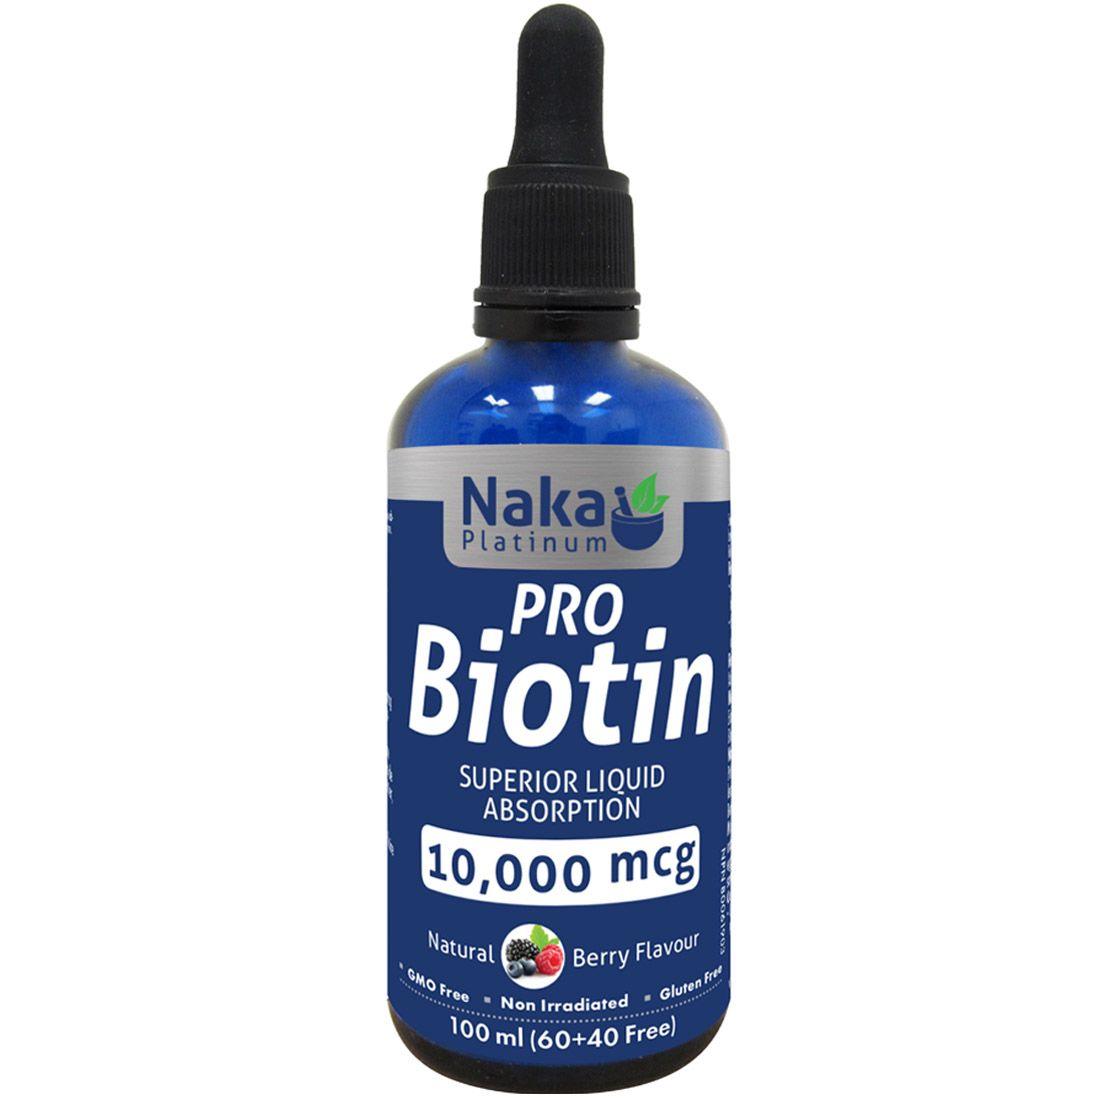 Naka Pro Biotin 10,000 mcg Superior Liquid Natural Barry Flavour Supplements - Hair Skin & Nails at Village Vitamin Store